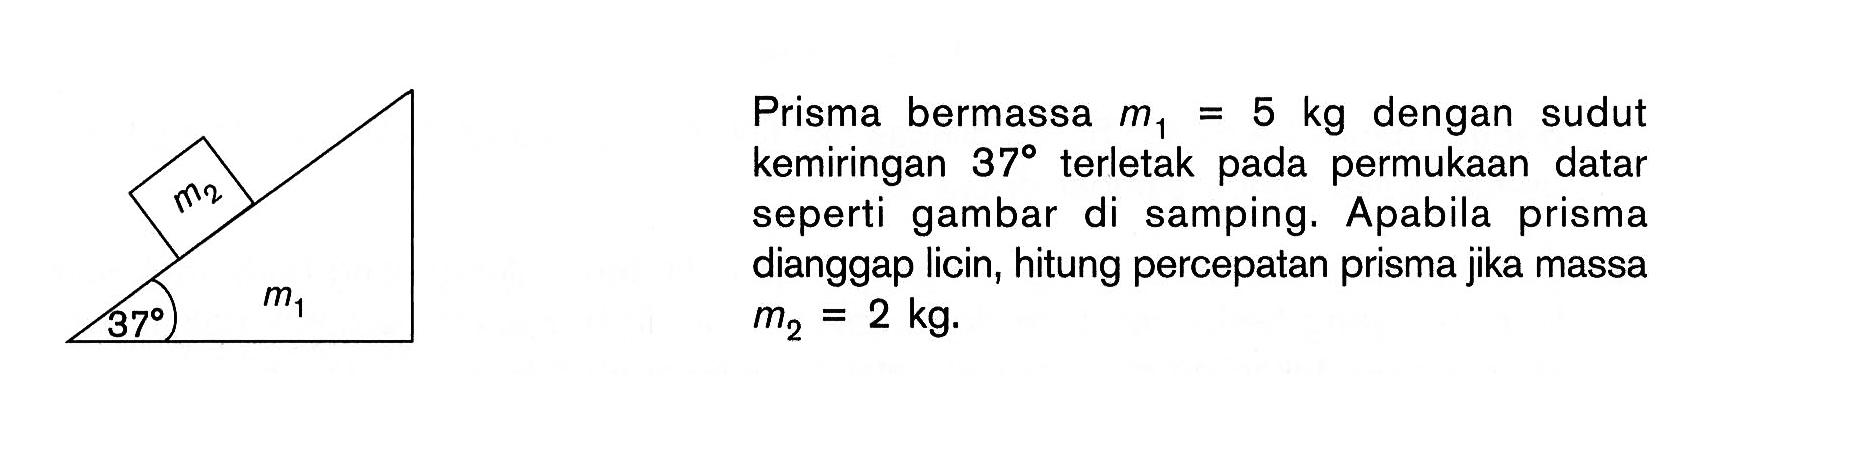 m2 37 m1 
Prisma bermassa m1 = 5 kg dengan sudut kemiringan 37 terletak pada permukaan datar seperti gambar di samping. Apabila prisma dianggap licin, hitung percepatan prisma jika massa m2 = 2 kg.